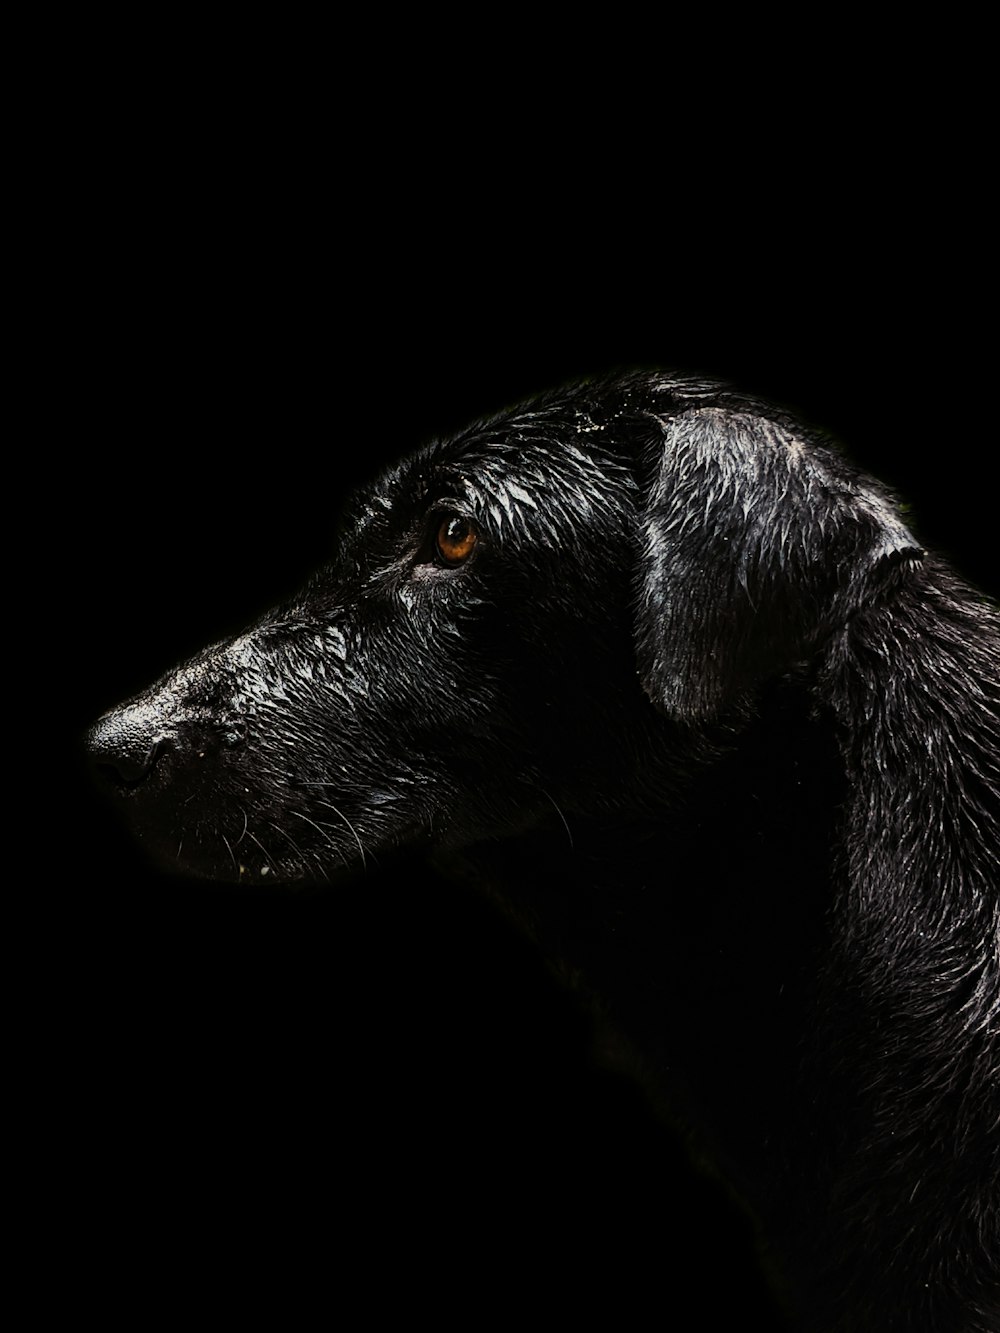 a close up of a black dog on a black background